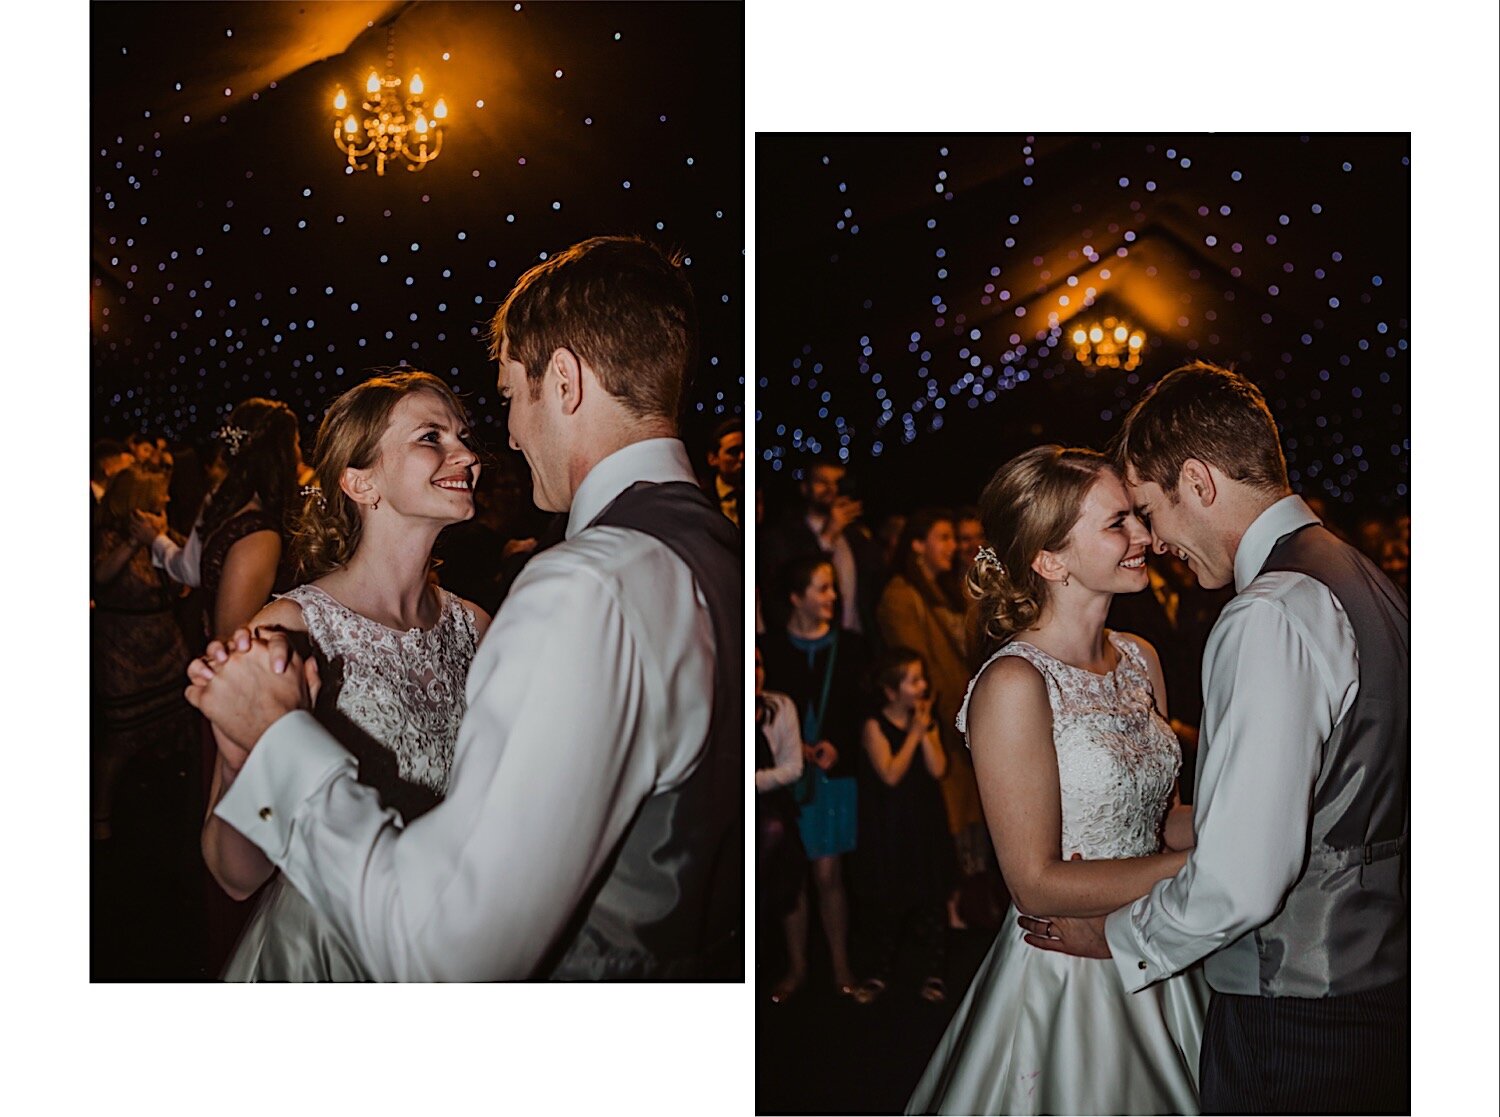 104_TWS-1113_TWS-1122__bride_photography_henley_oxfordshire_millitary_dance_reception_dancing_crooked_night_wedding_groom_winter_billet.jpg